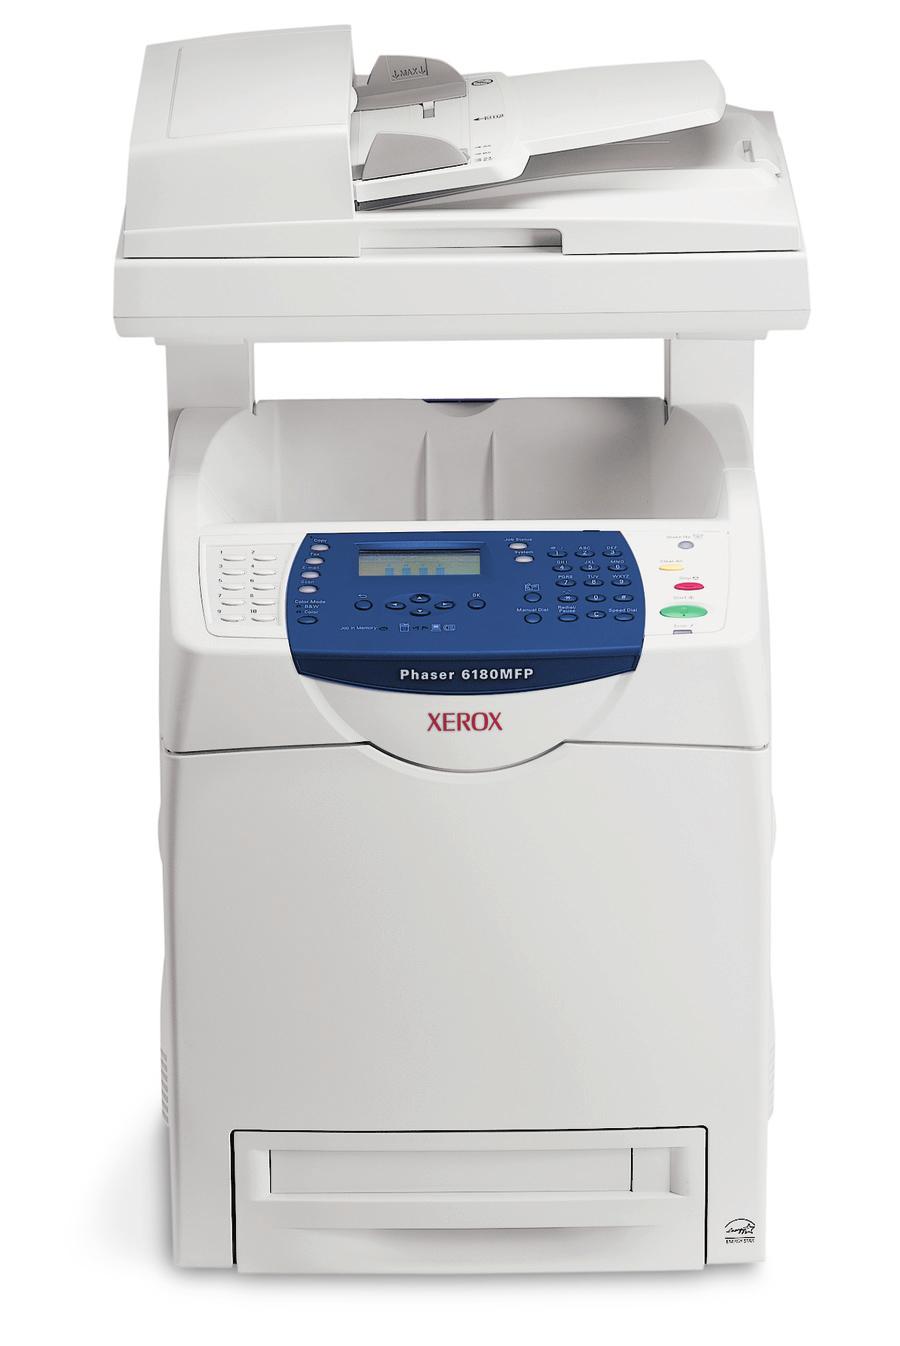 Xerox Phaser 6180MFP Multifunction Printer Competitive Assessment Xerox Phaser 6180MFP Series vs.